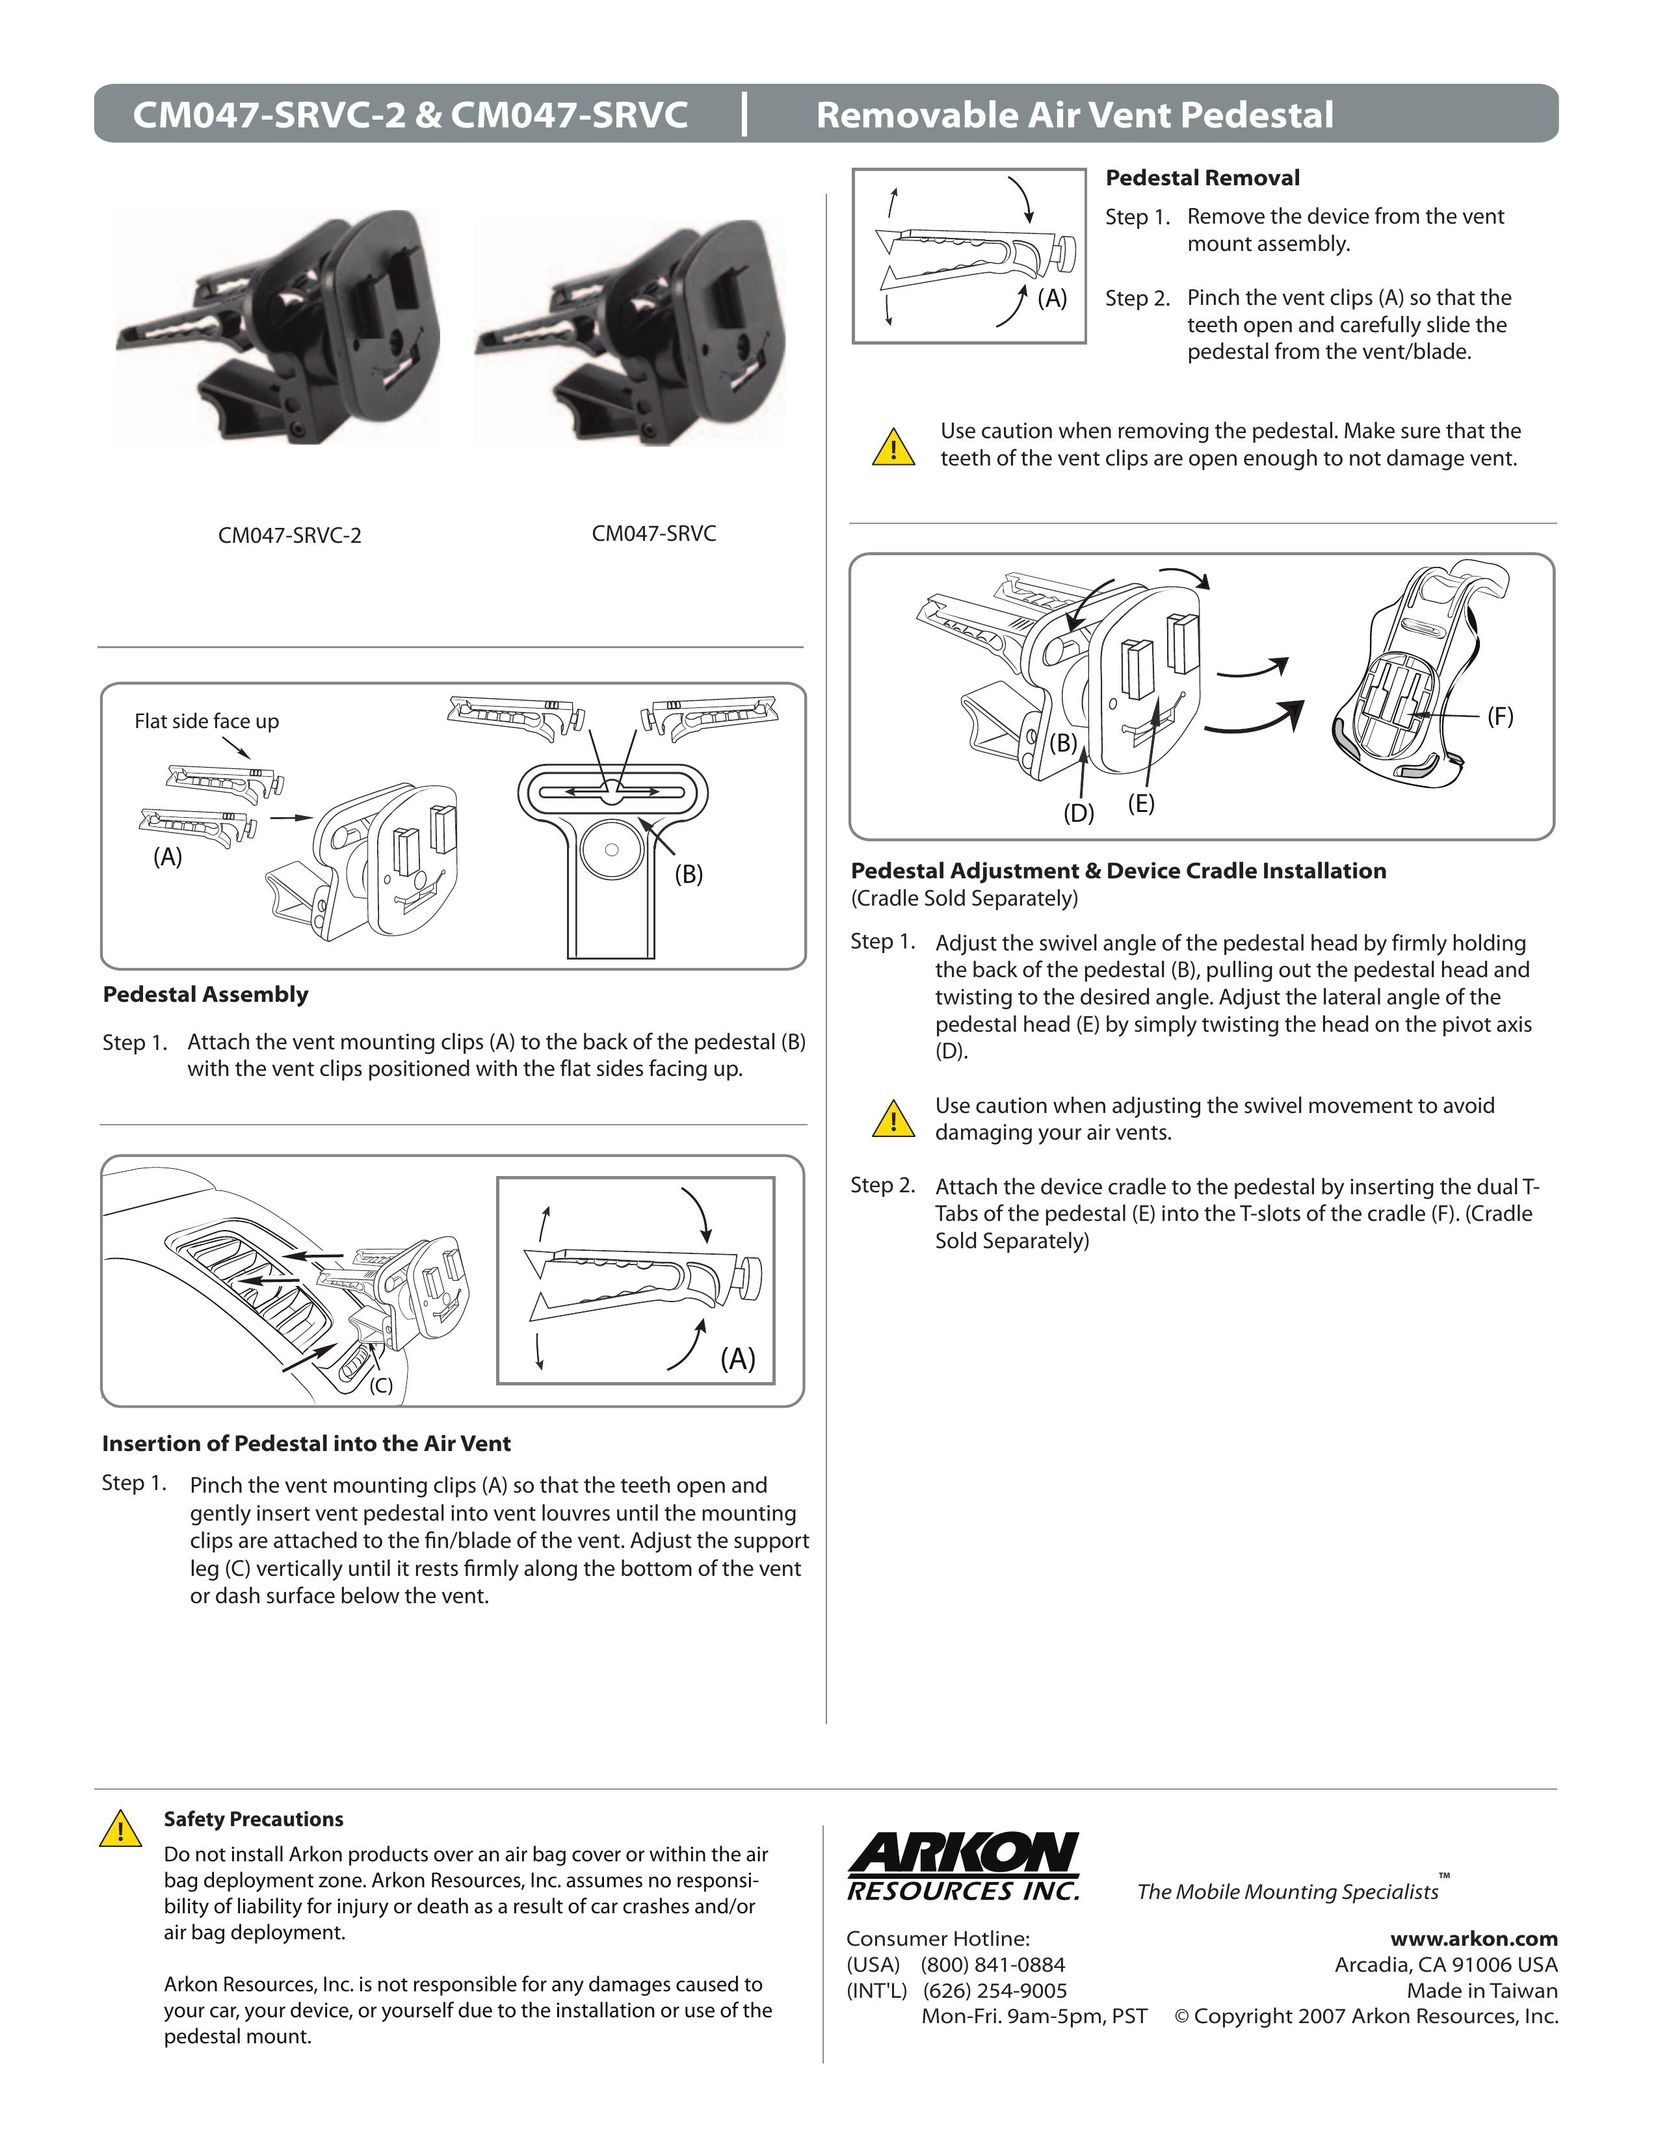 Black & Decker CM047-SRVC-2 TV Cables User Manual